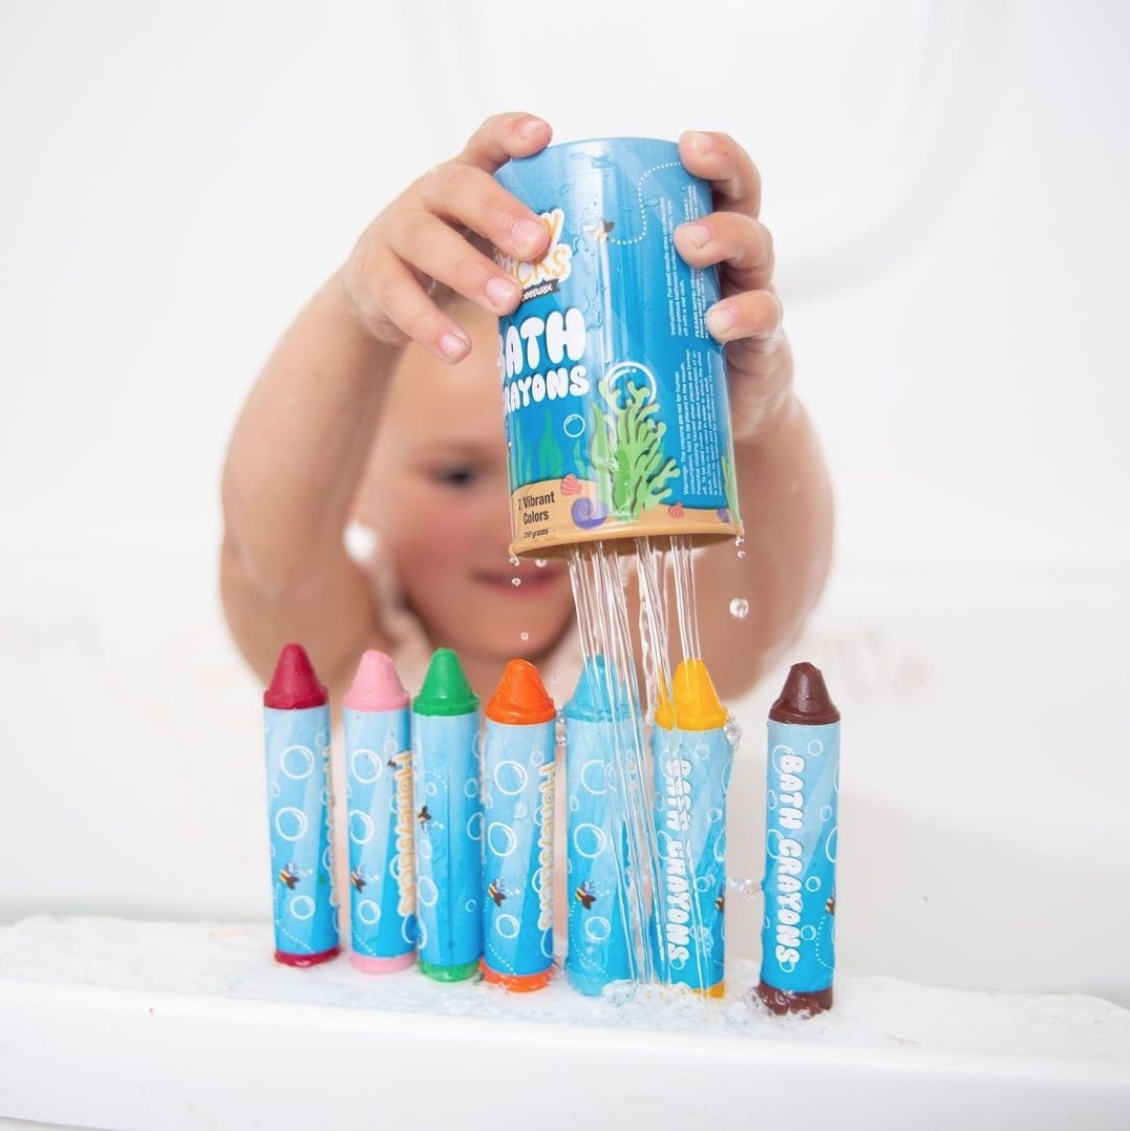 Waterproof bath crayon labels that don't hurt the planet